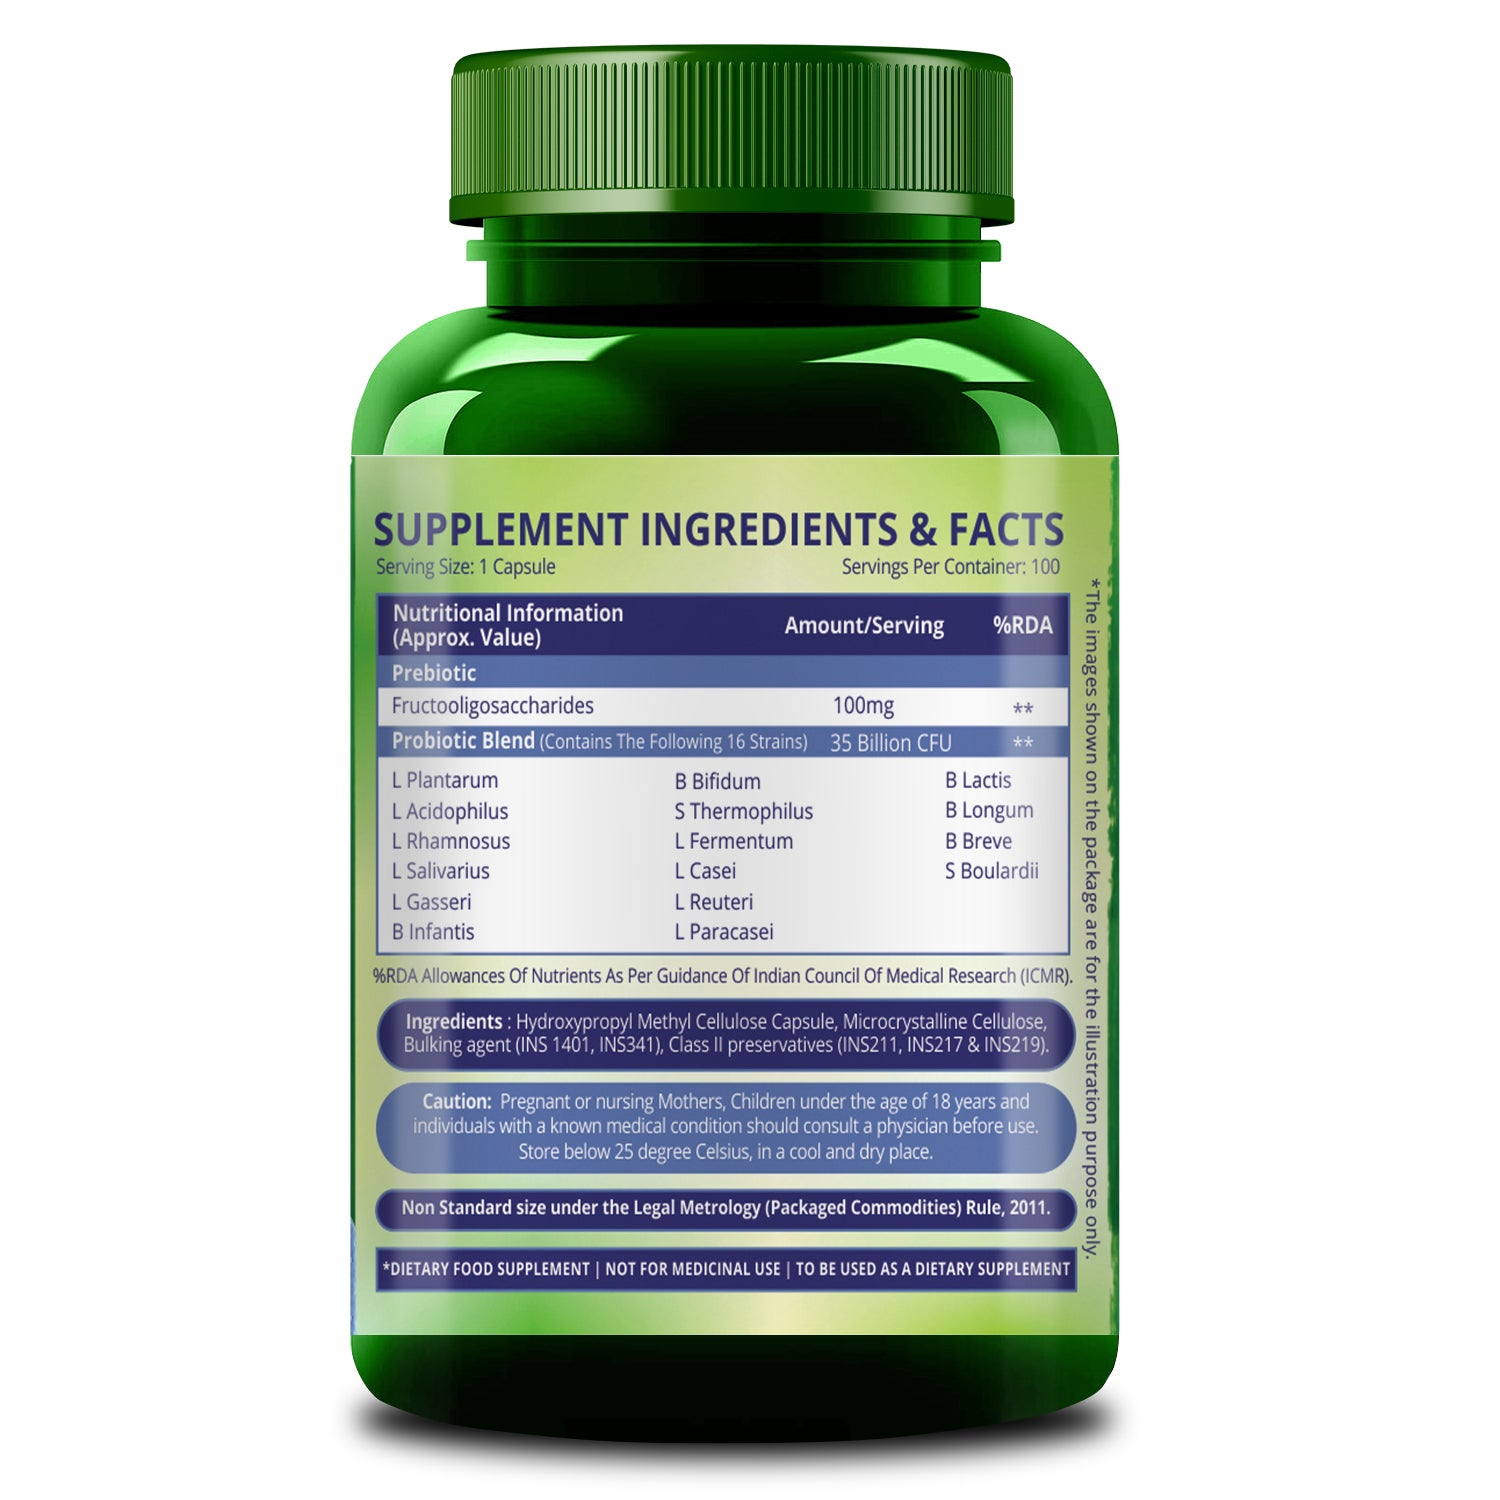 Himalayan Organics Probiotics Supplement Ingredients & Facts b infantis, L acidophilus, L plantarum